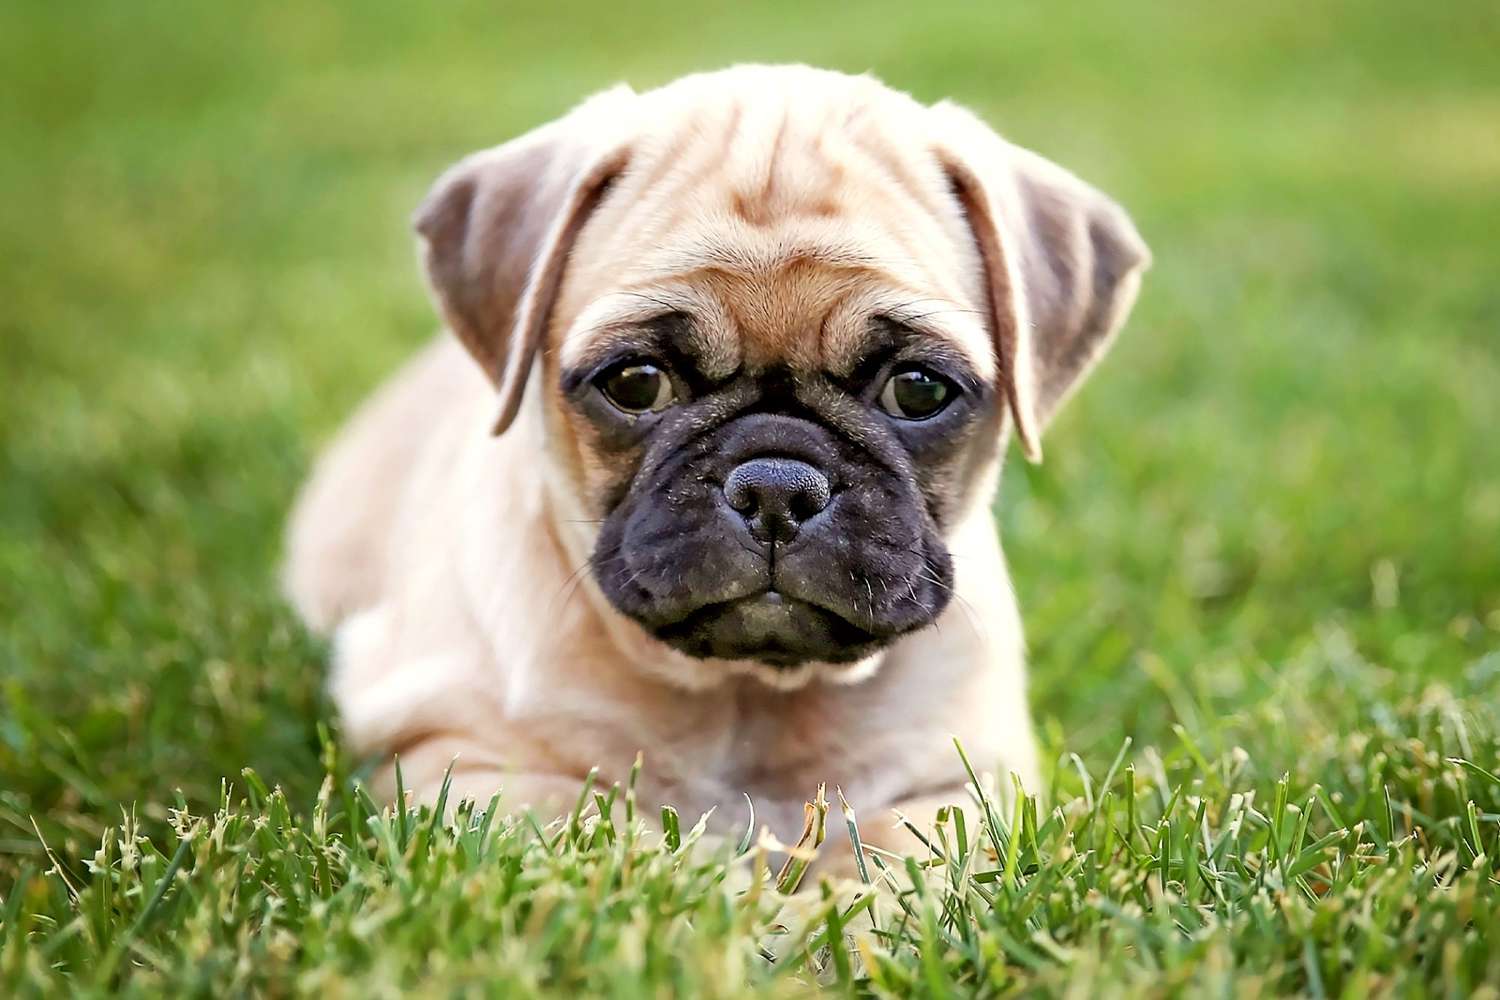 chug puppy lying in grass